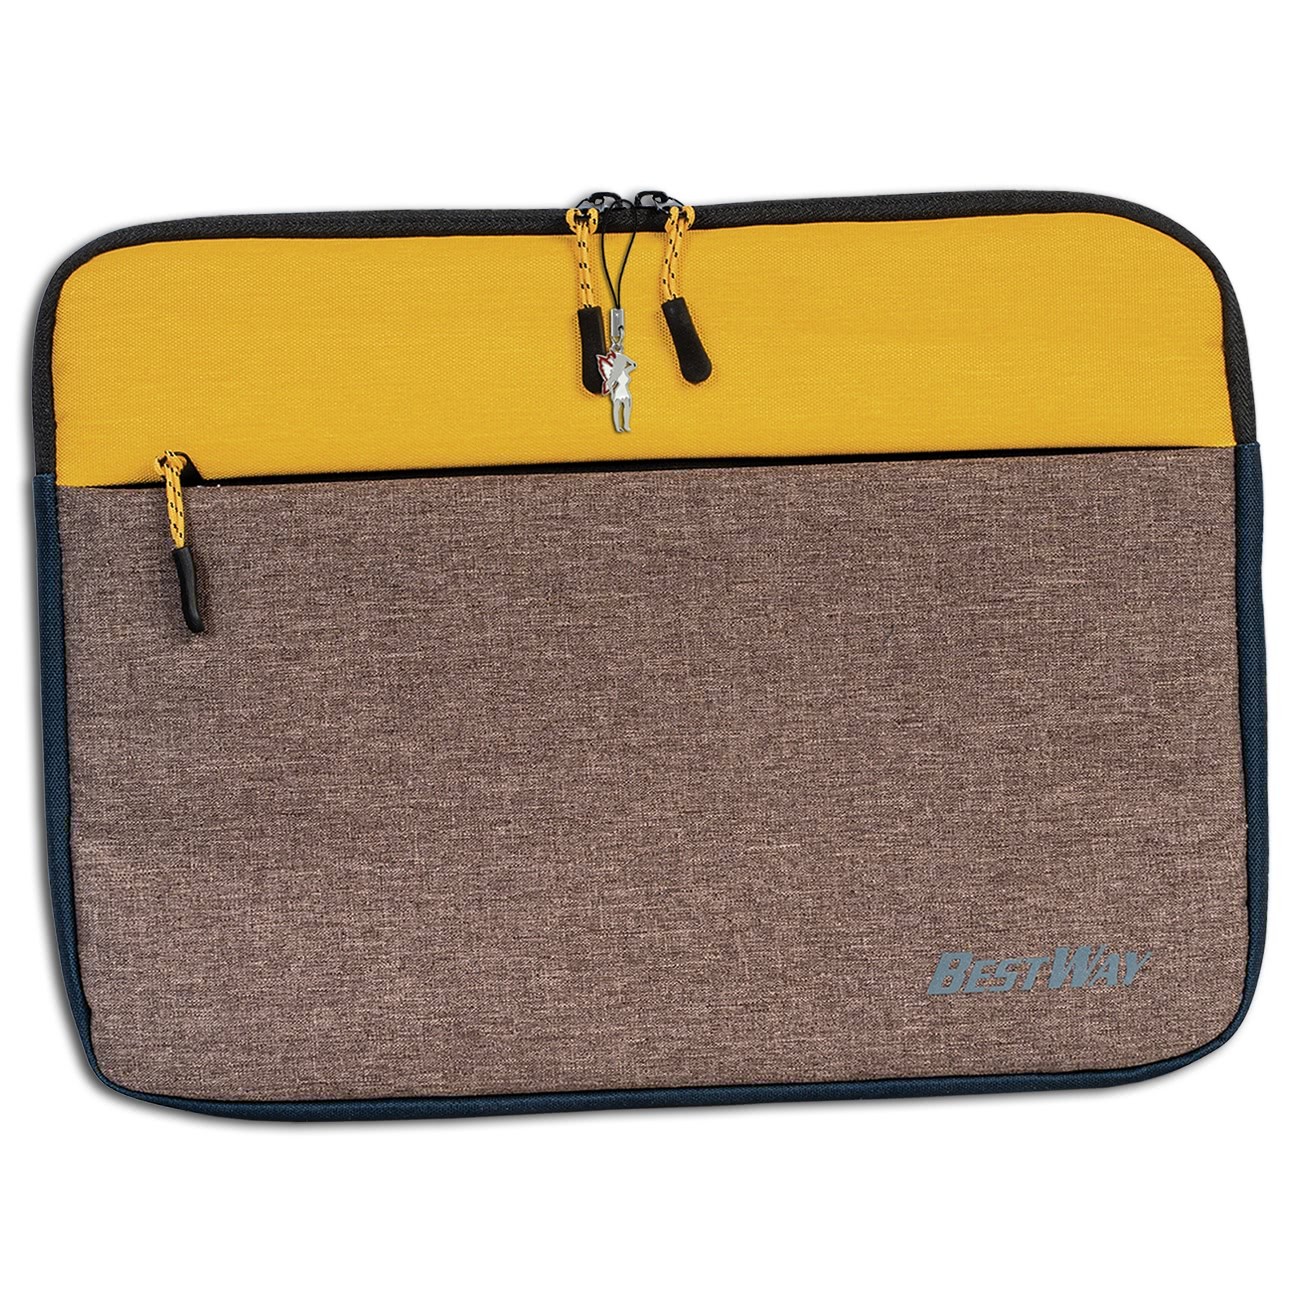 Bestway Laptop-Tasche 13 - 14 Zoll Polyester gelb ocker OTI108Y